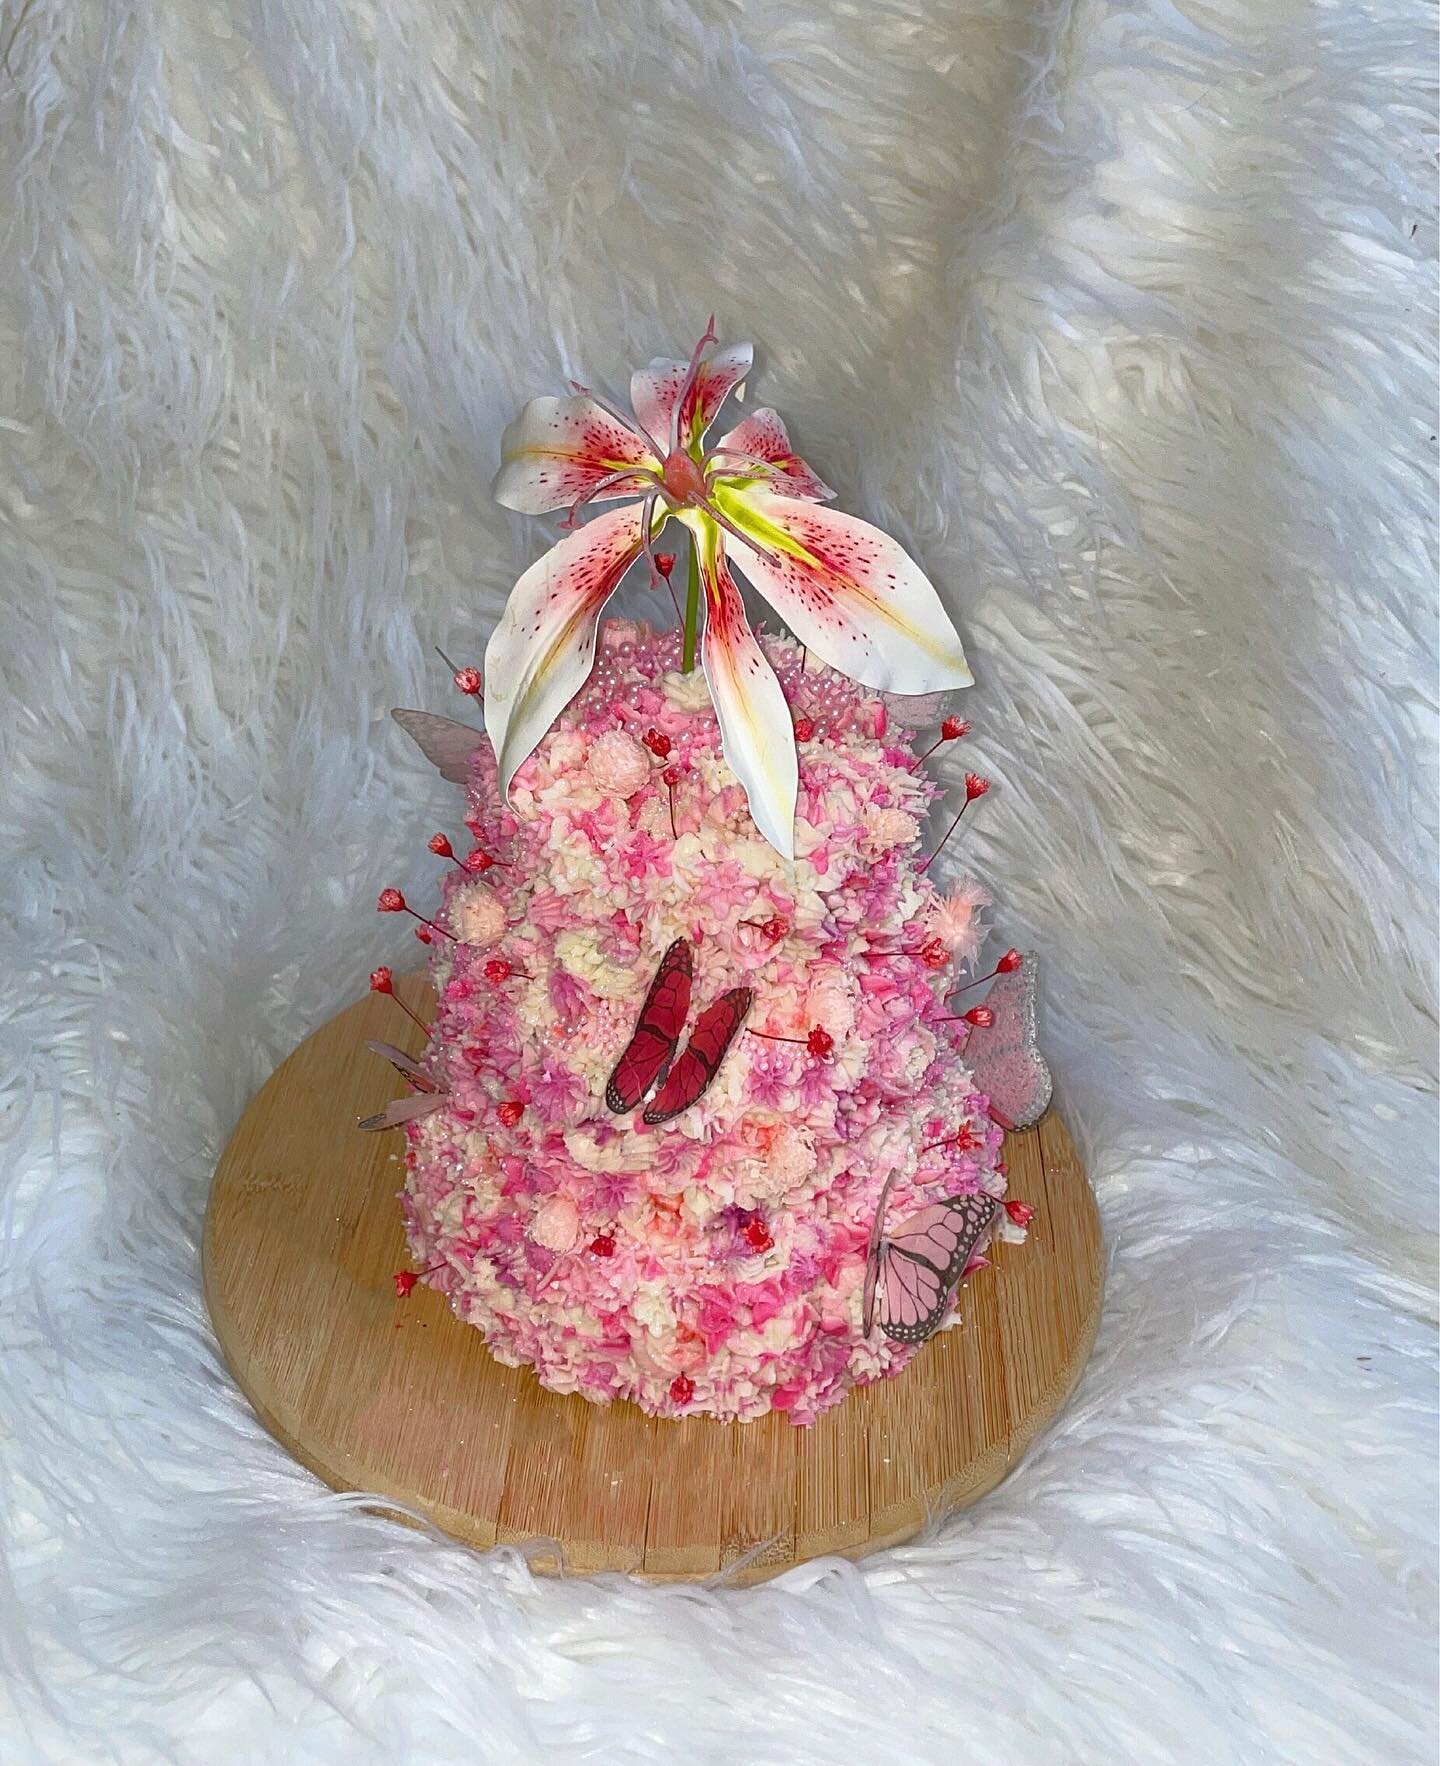 🎀 𝐸𝓋𝑒𝓇𝓎𝒷♡𝒹𝓎 𝖑𝖔𝖛𝖊𝖘 𝖕𝖎𝖓𝖐💅🏼 mini tiered funfetti cake for a bday princesssa

#cake #cakedecorating #cakes #birthdaycake #chocolate #food #dessert #cakesofinstagram #birthday #cakedesign #instafood #baking #foodporn #yummy #cakestagra